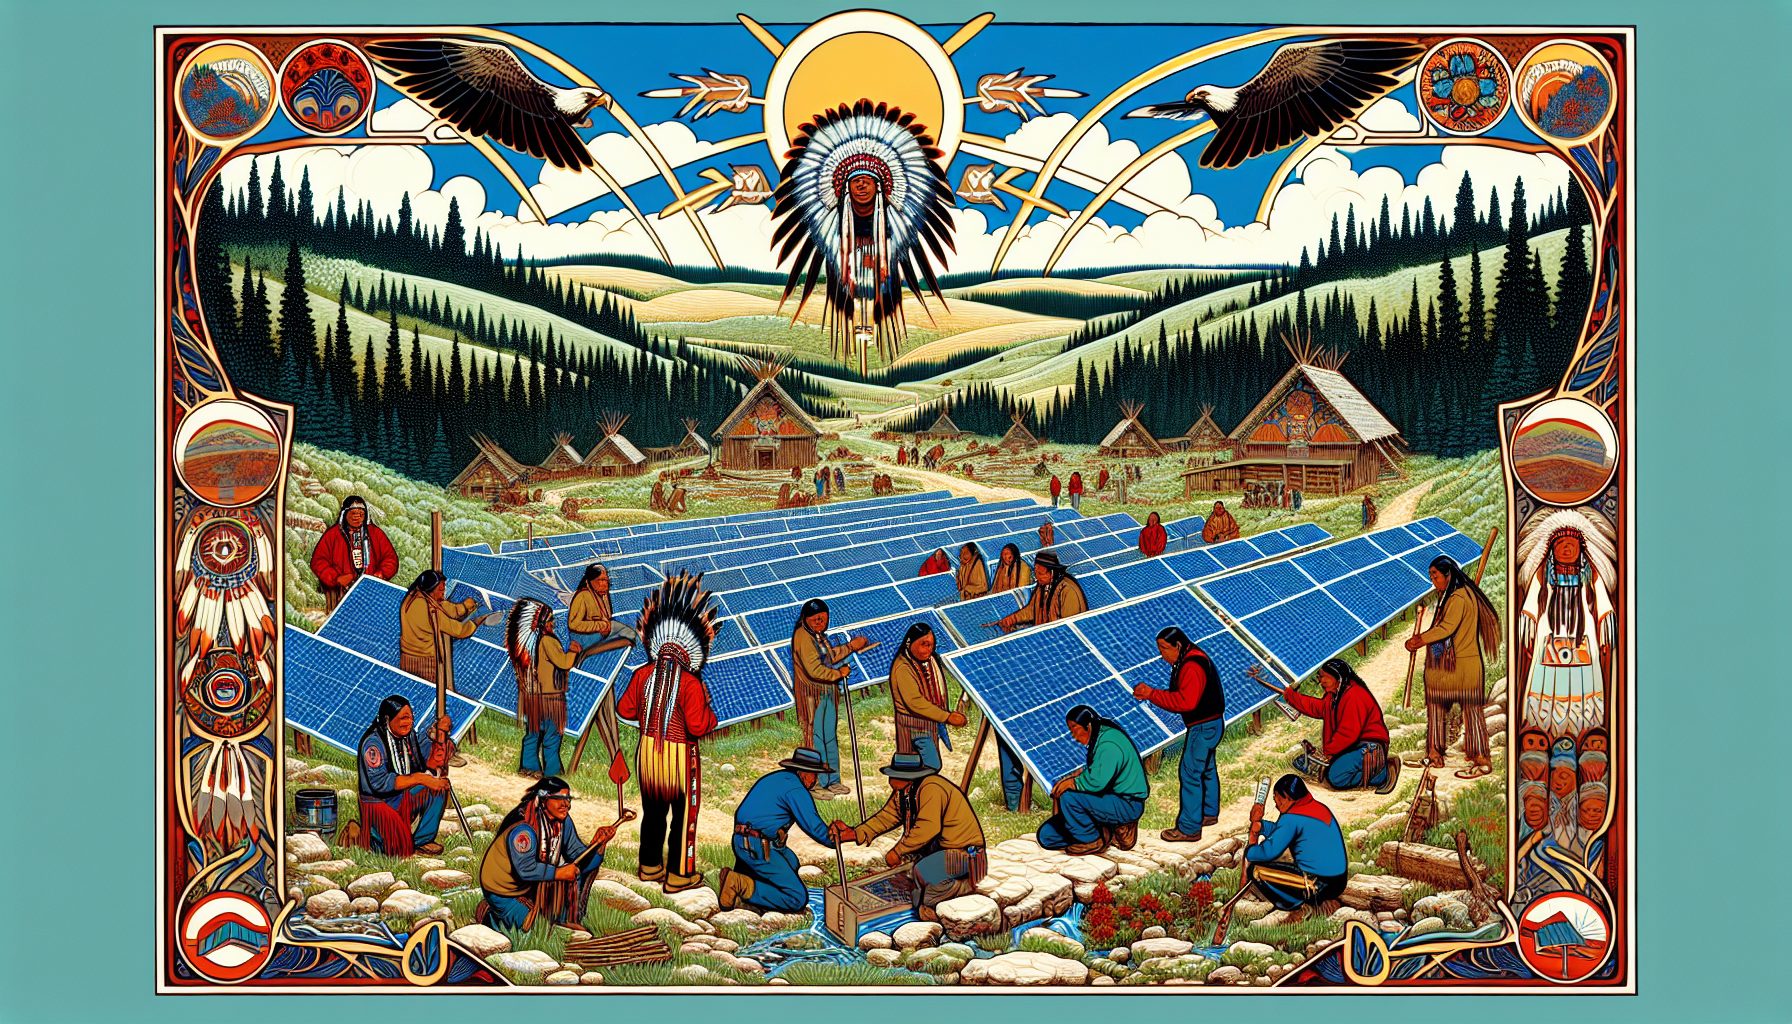 Indigenized Solar